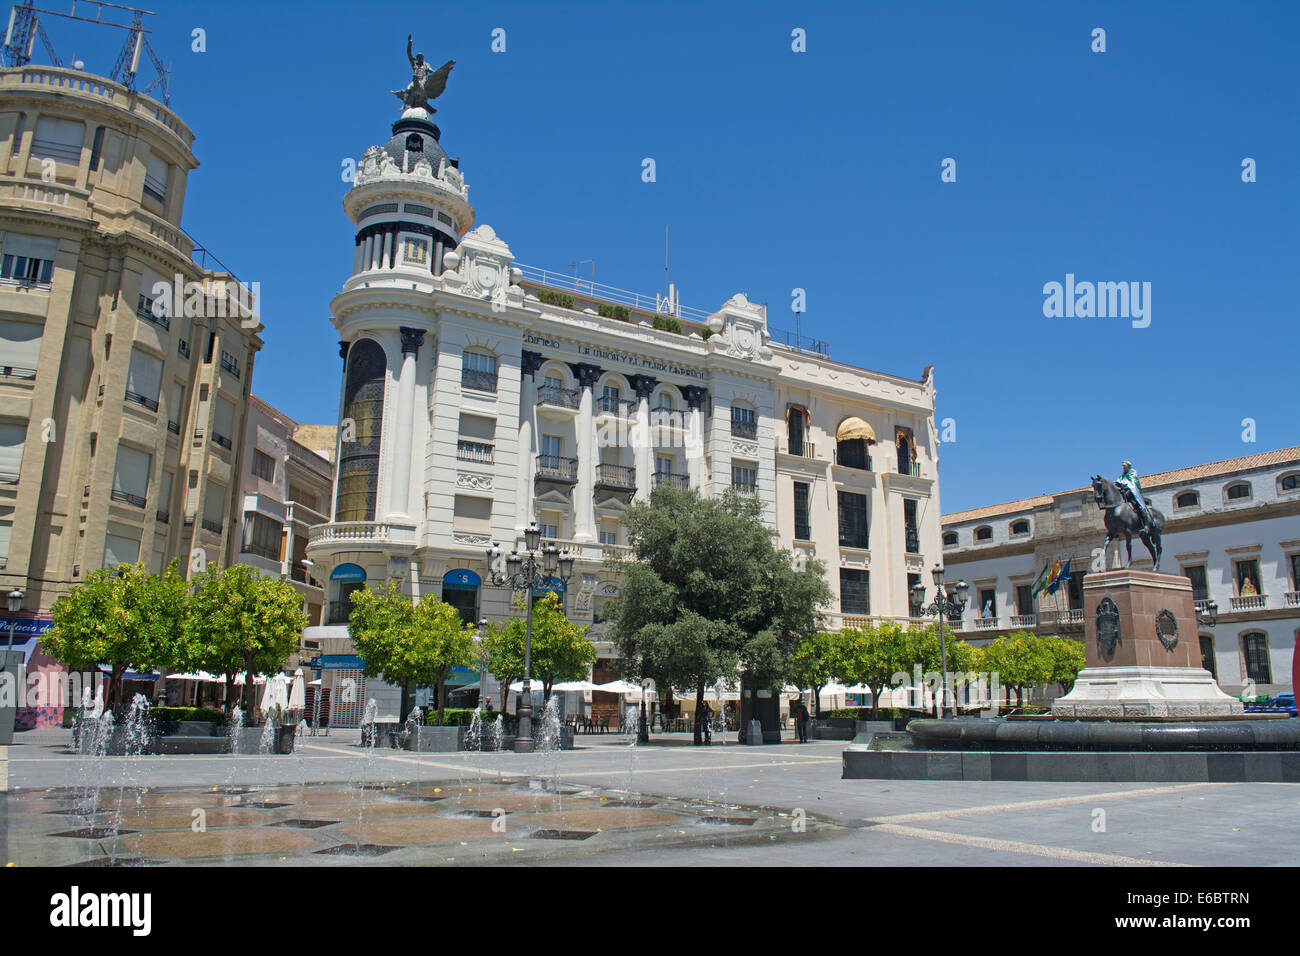 Fun pavement water feature at the Plaza de las Tendillas, Cordoba, Andalusia, Spain, Europe Stock Photo